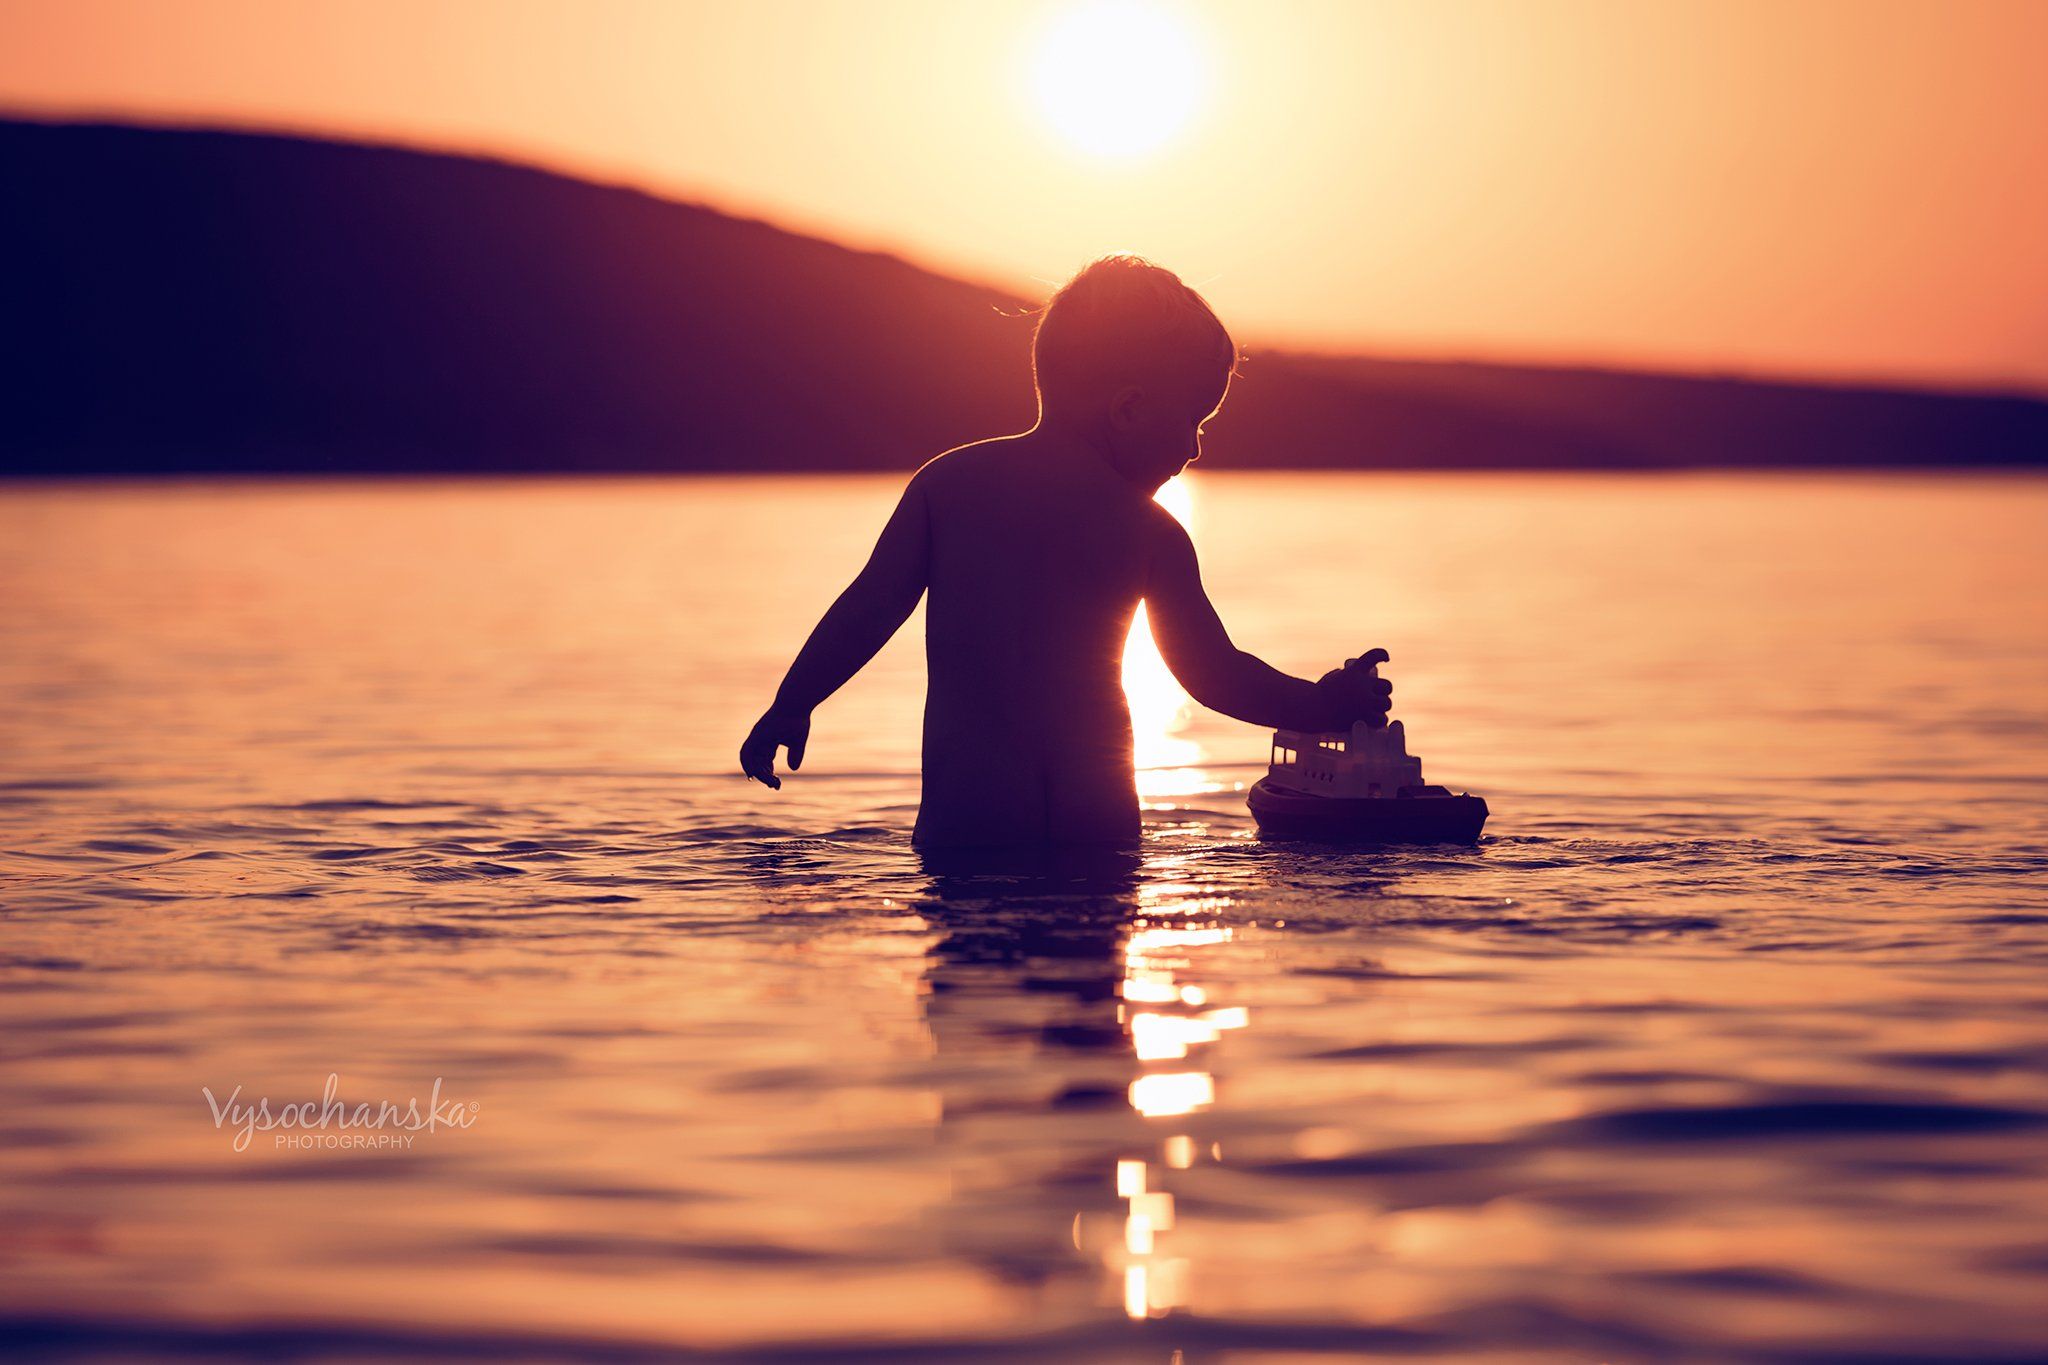 childchood, summer, sea, boy, play, boat, sunset, Vysochanska Photography